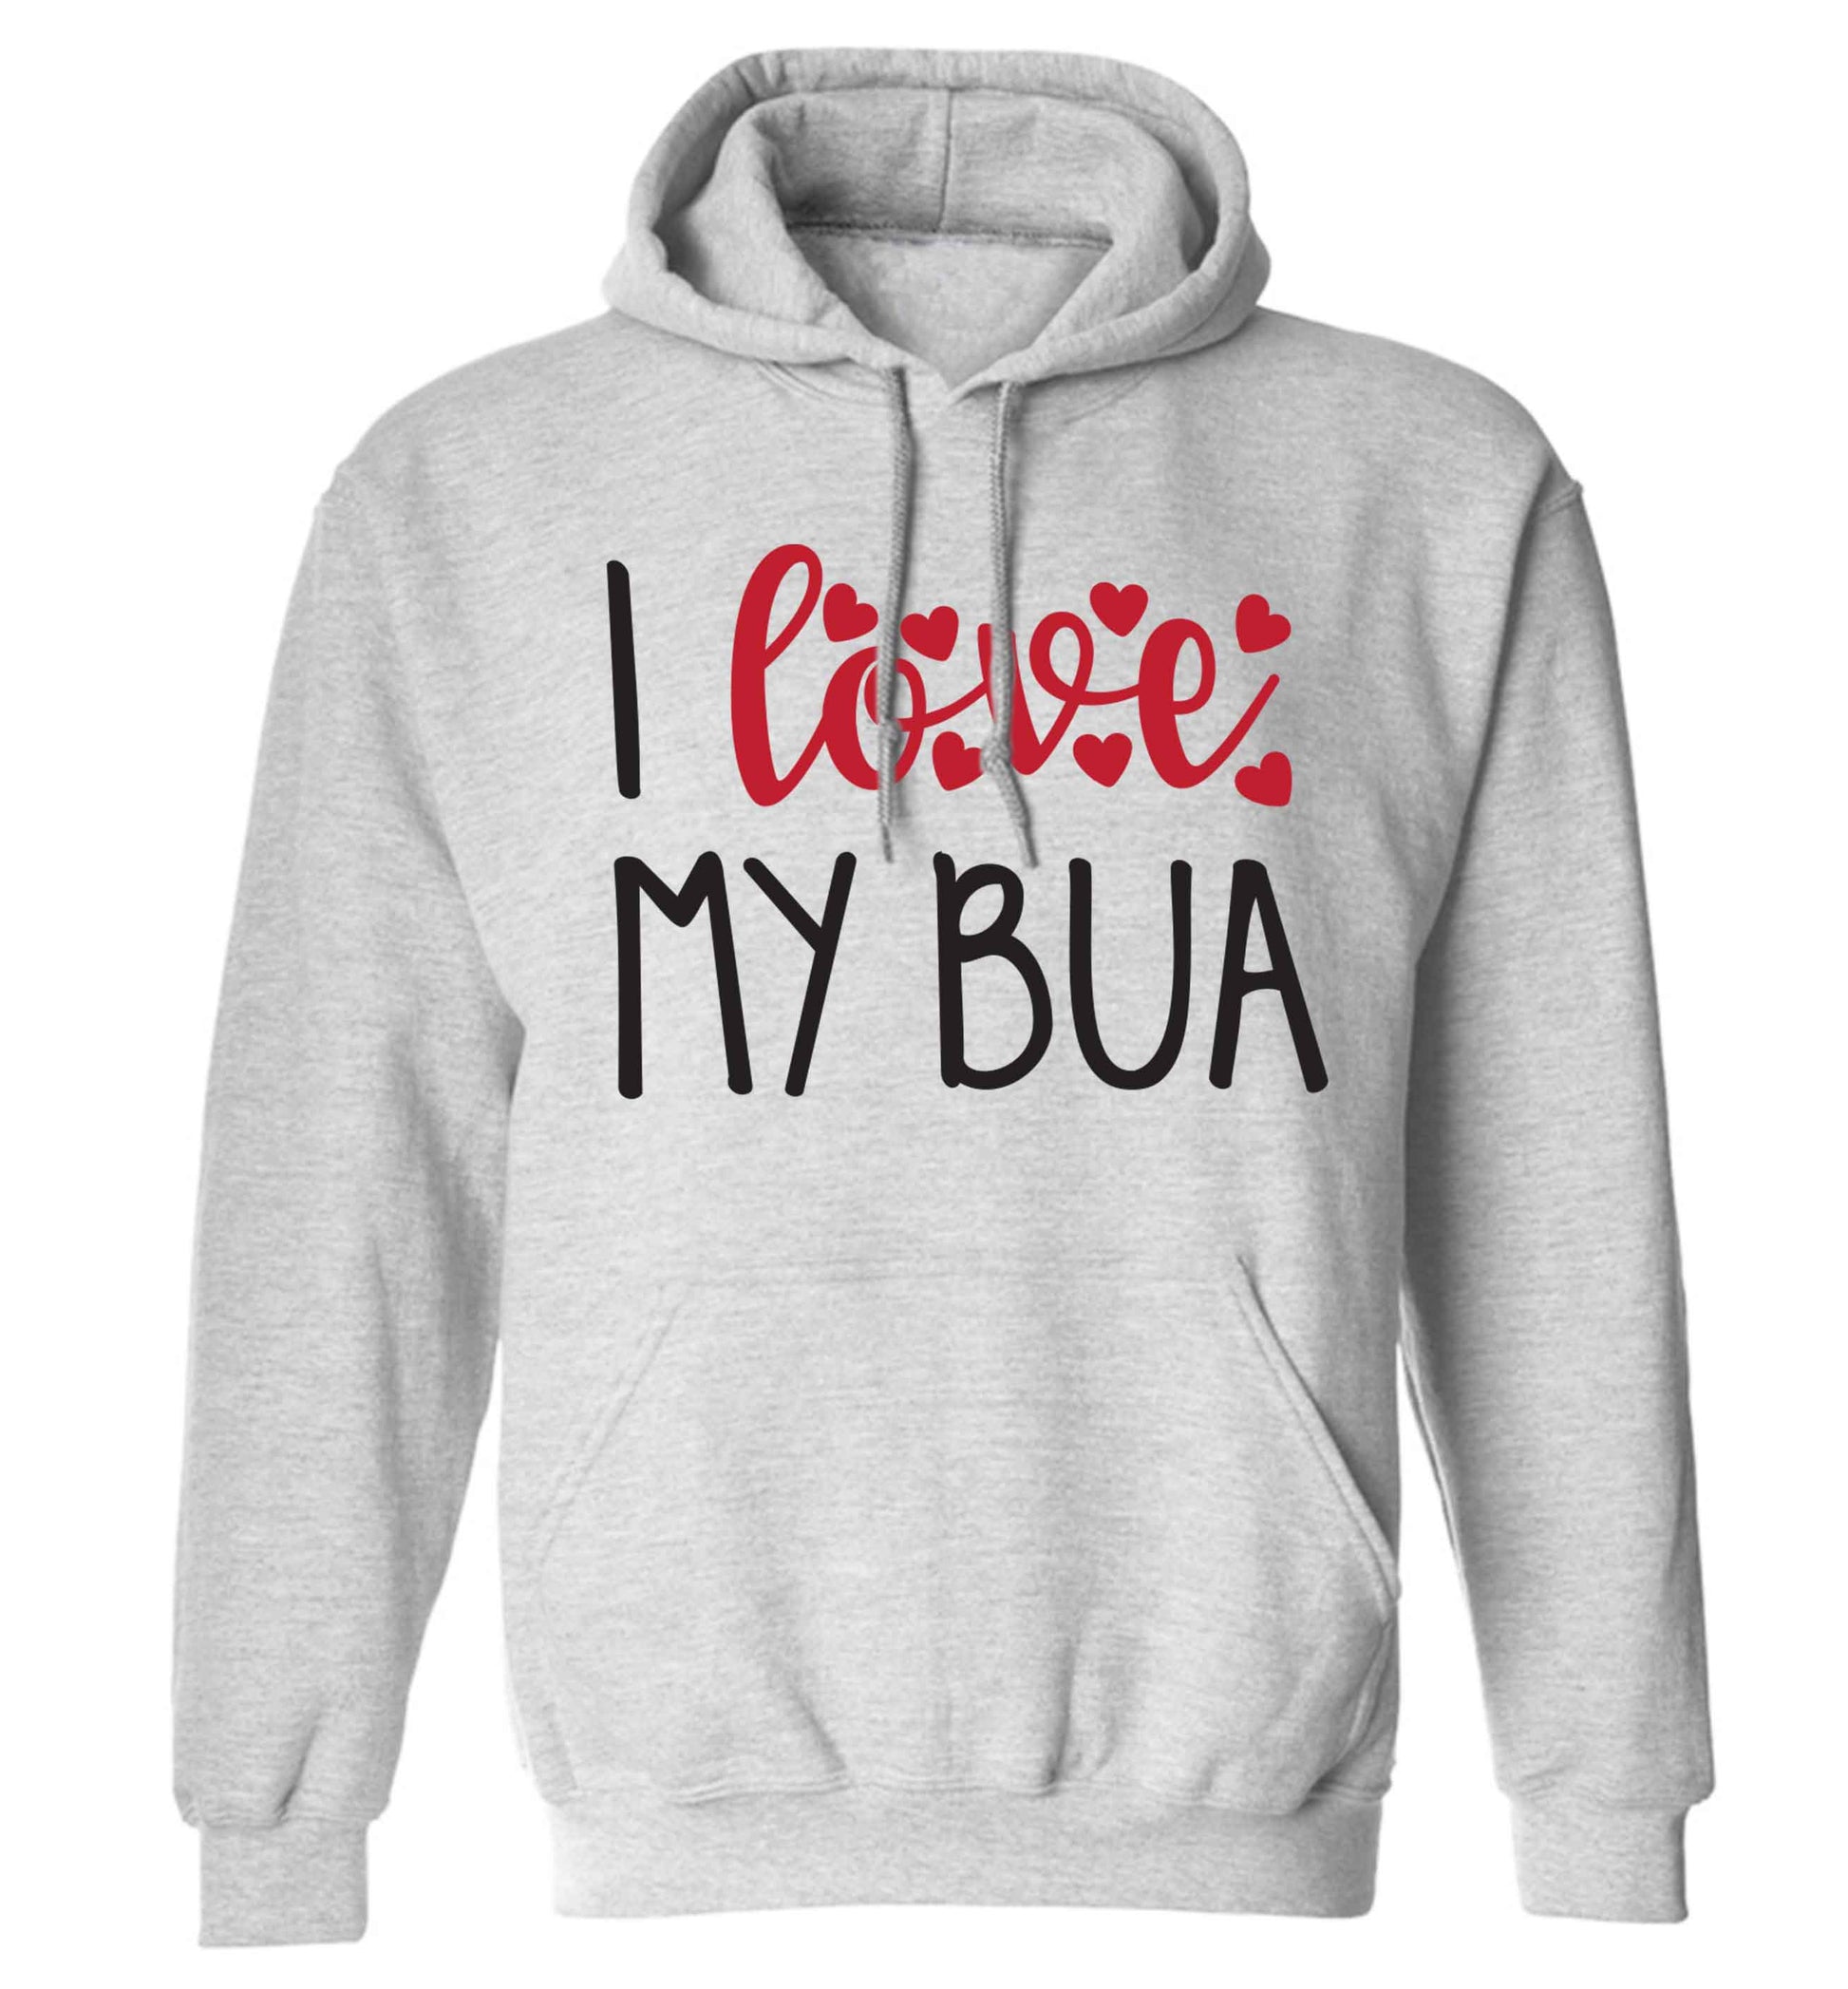 I love my bua adults unisex grey hoodie 2XL